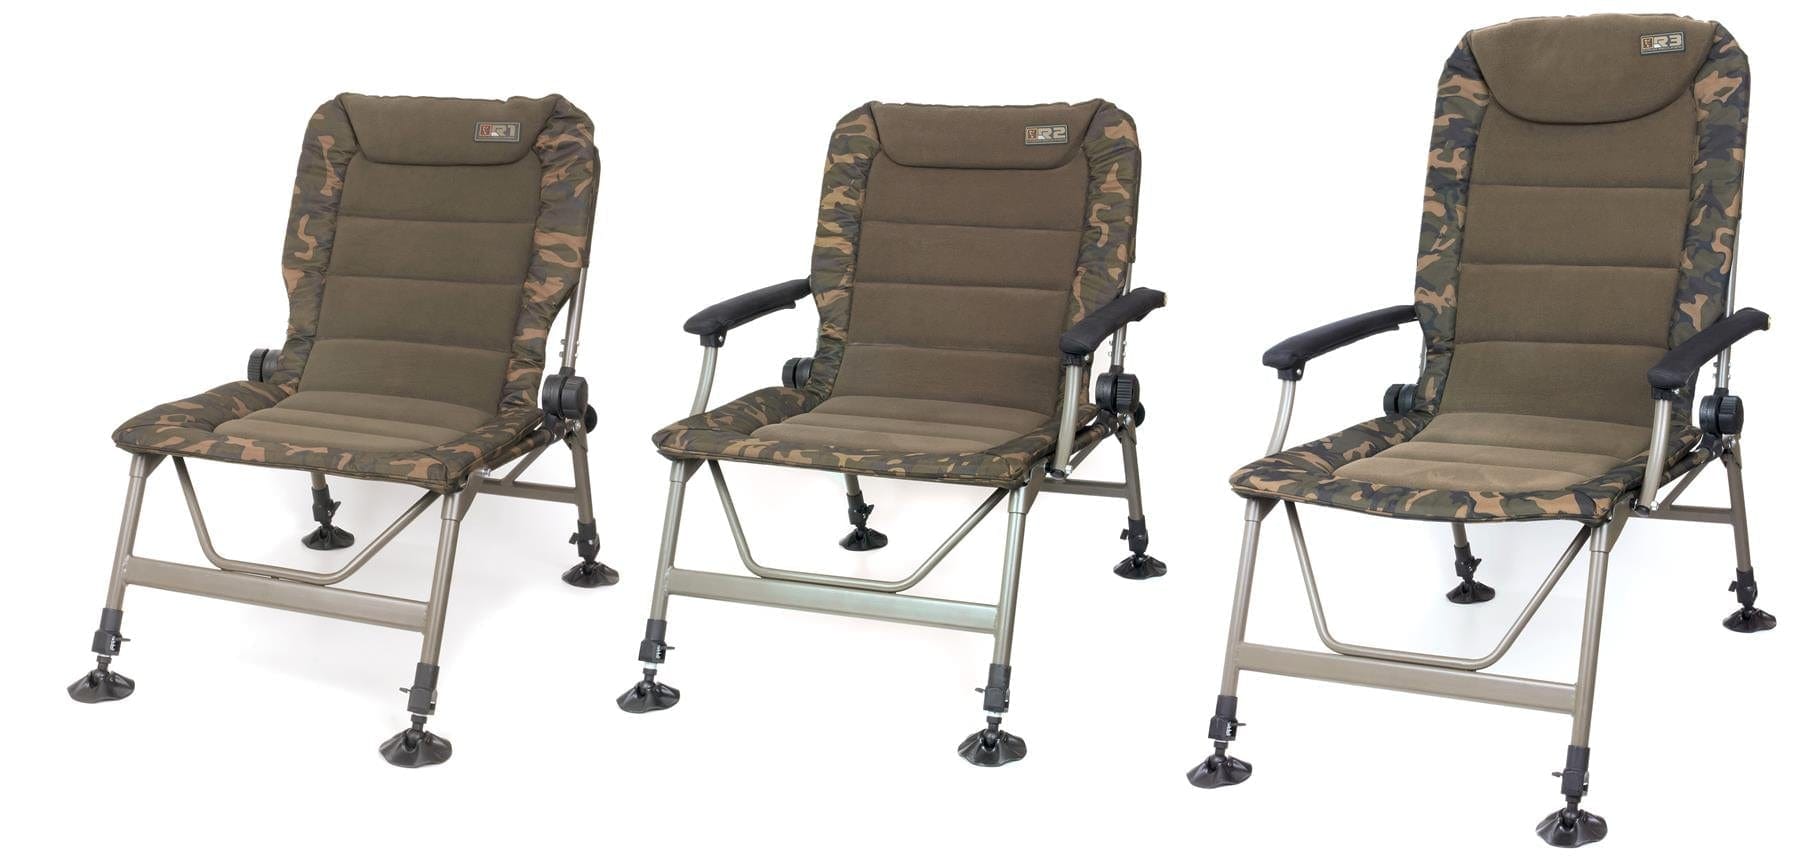 FOX R-Series Camo Chairs.